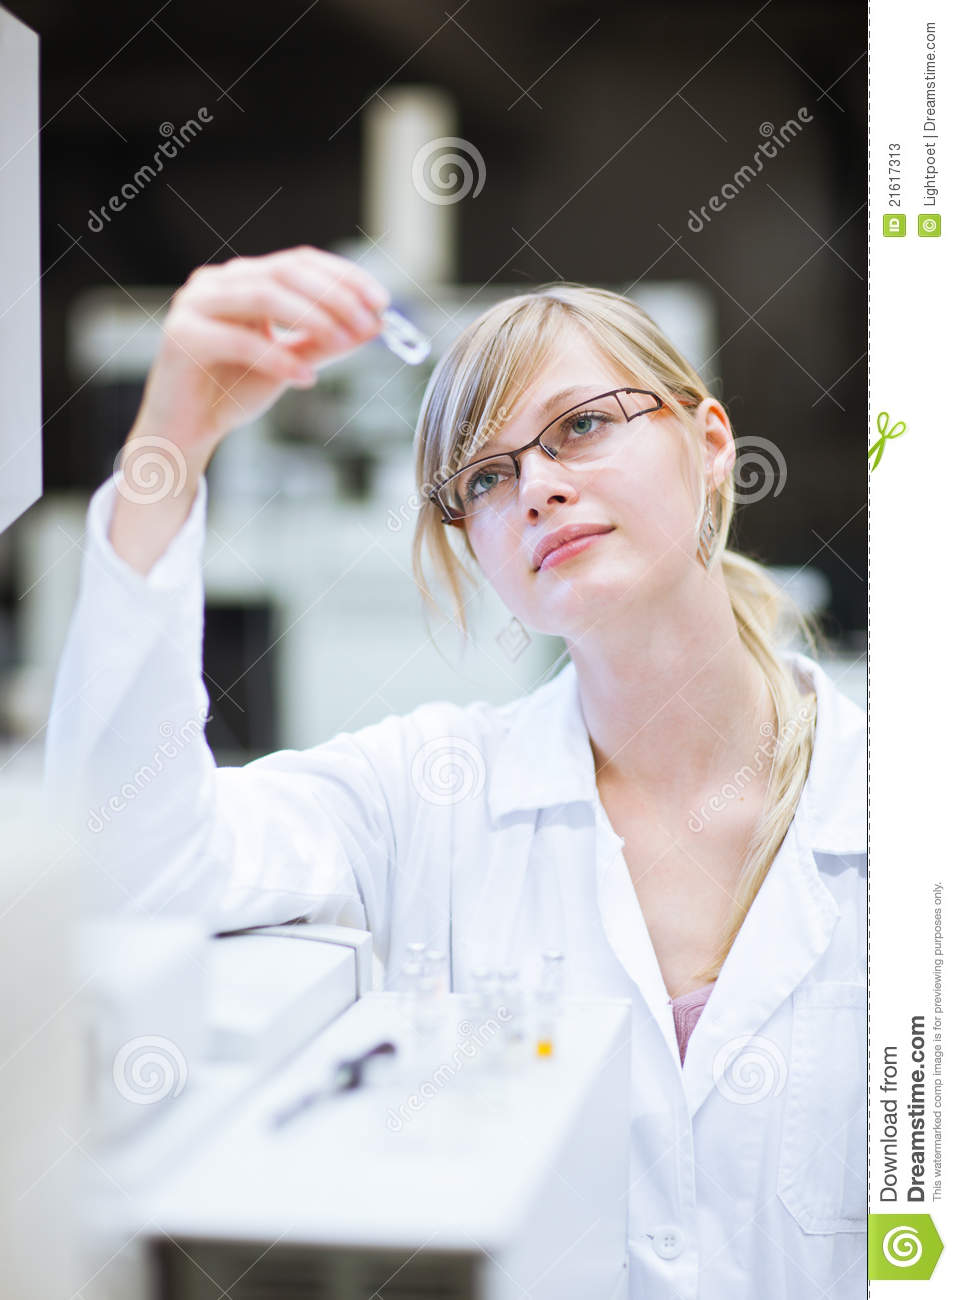 portrait-female-researcher-chemistry-student-21617313.jpg